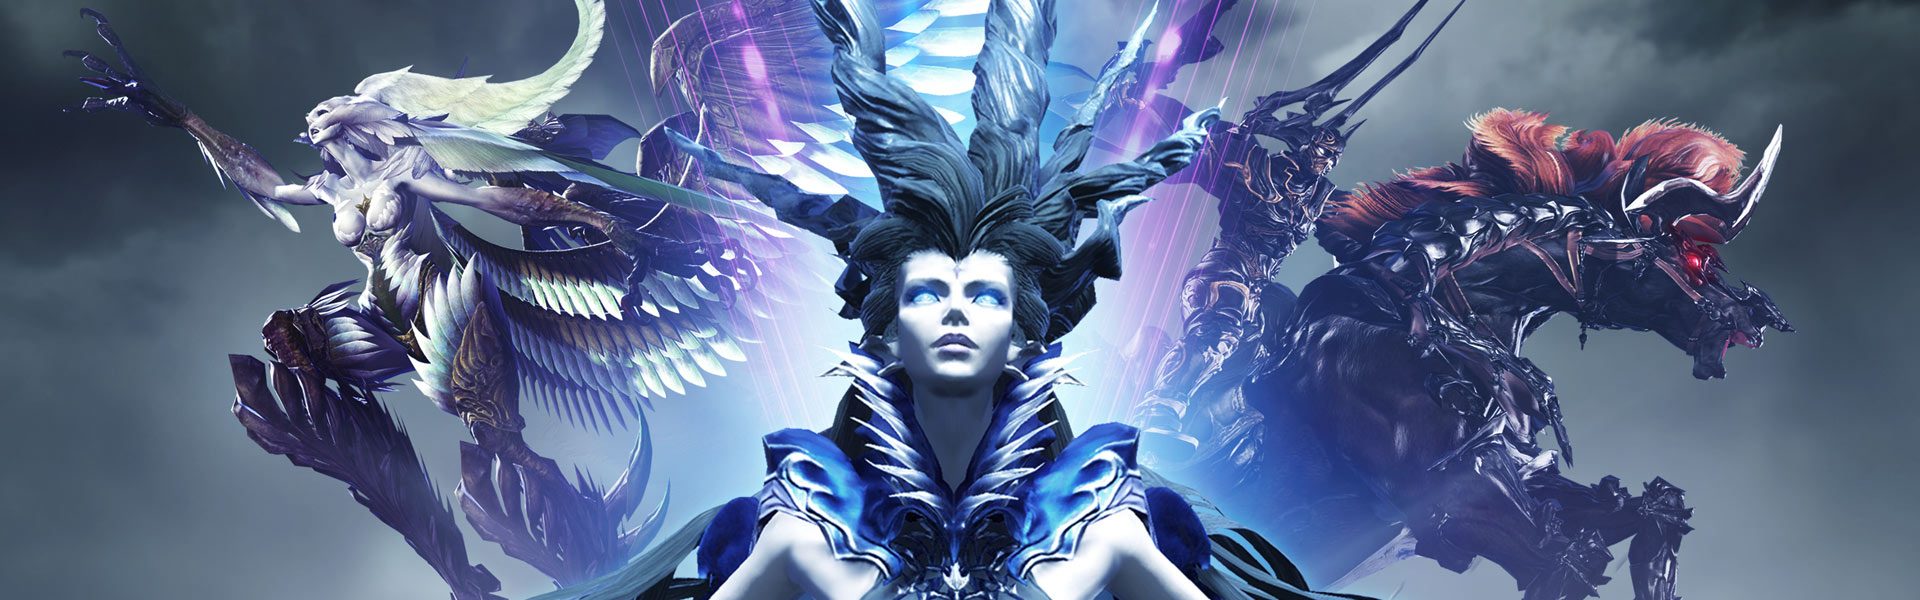 final fantasy xiv online icon